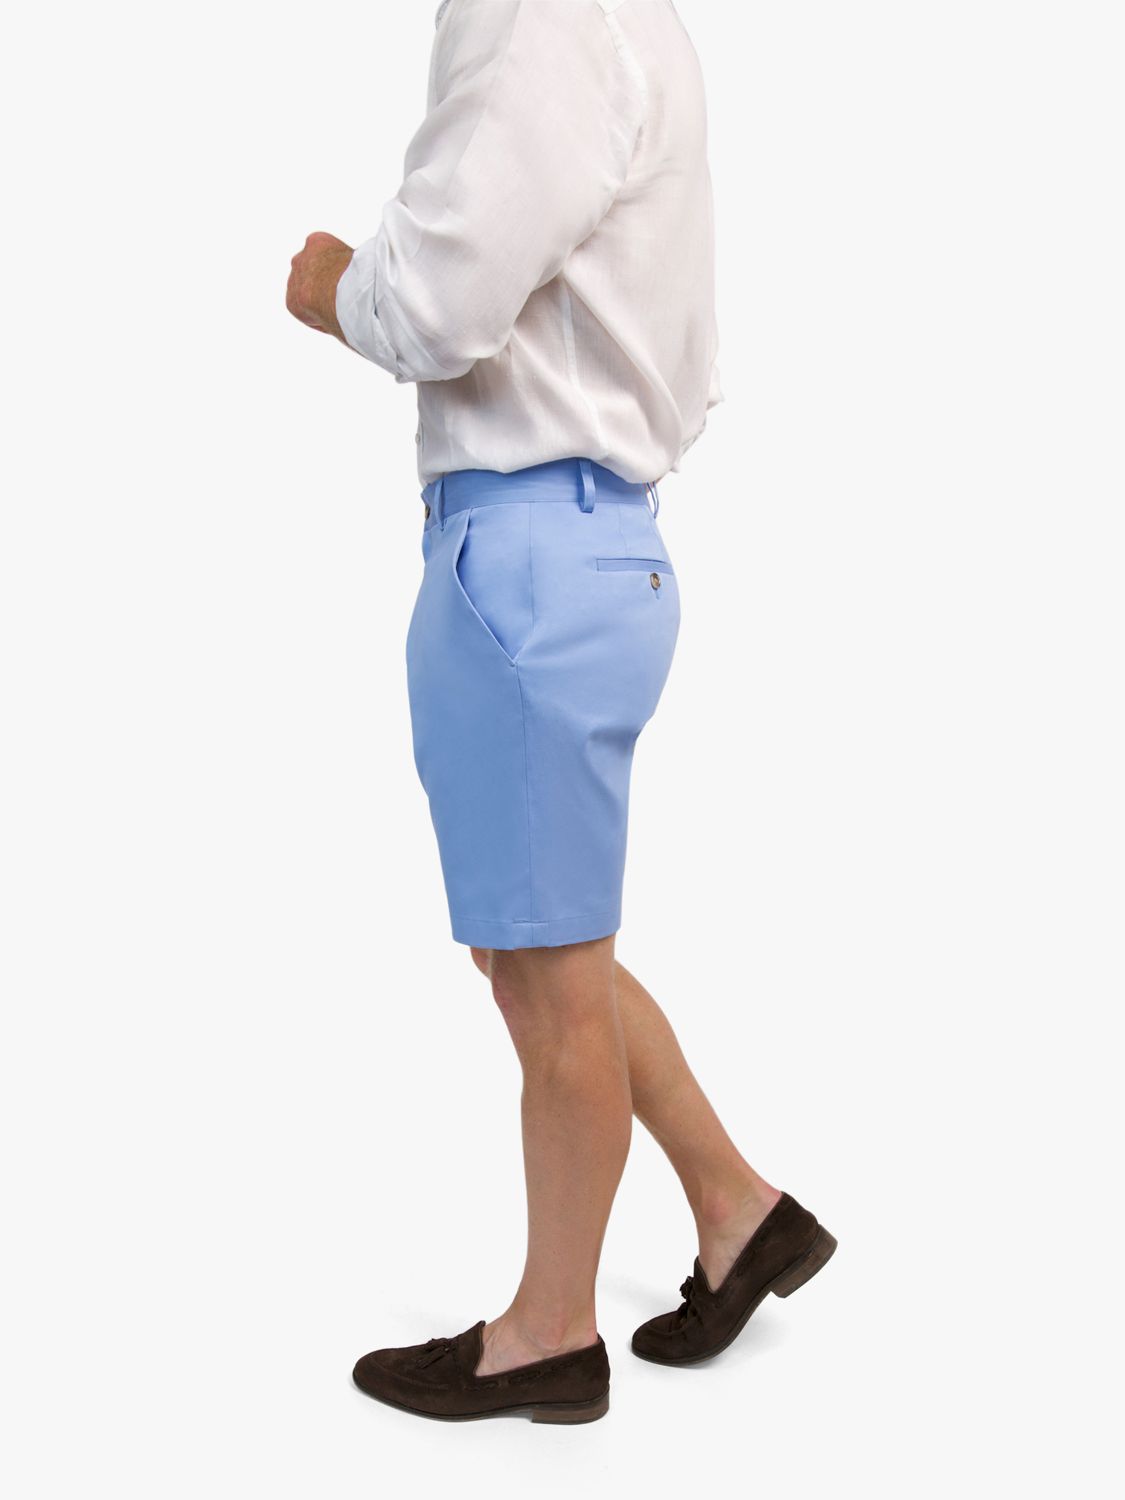 KOY Slim Chinos Shorts, Light Blue, 34R